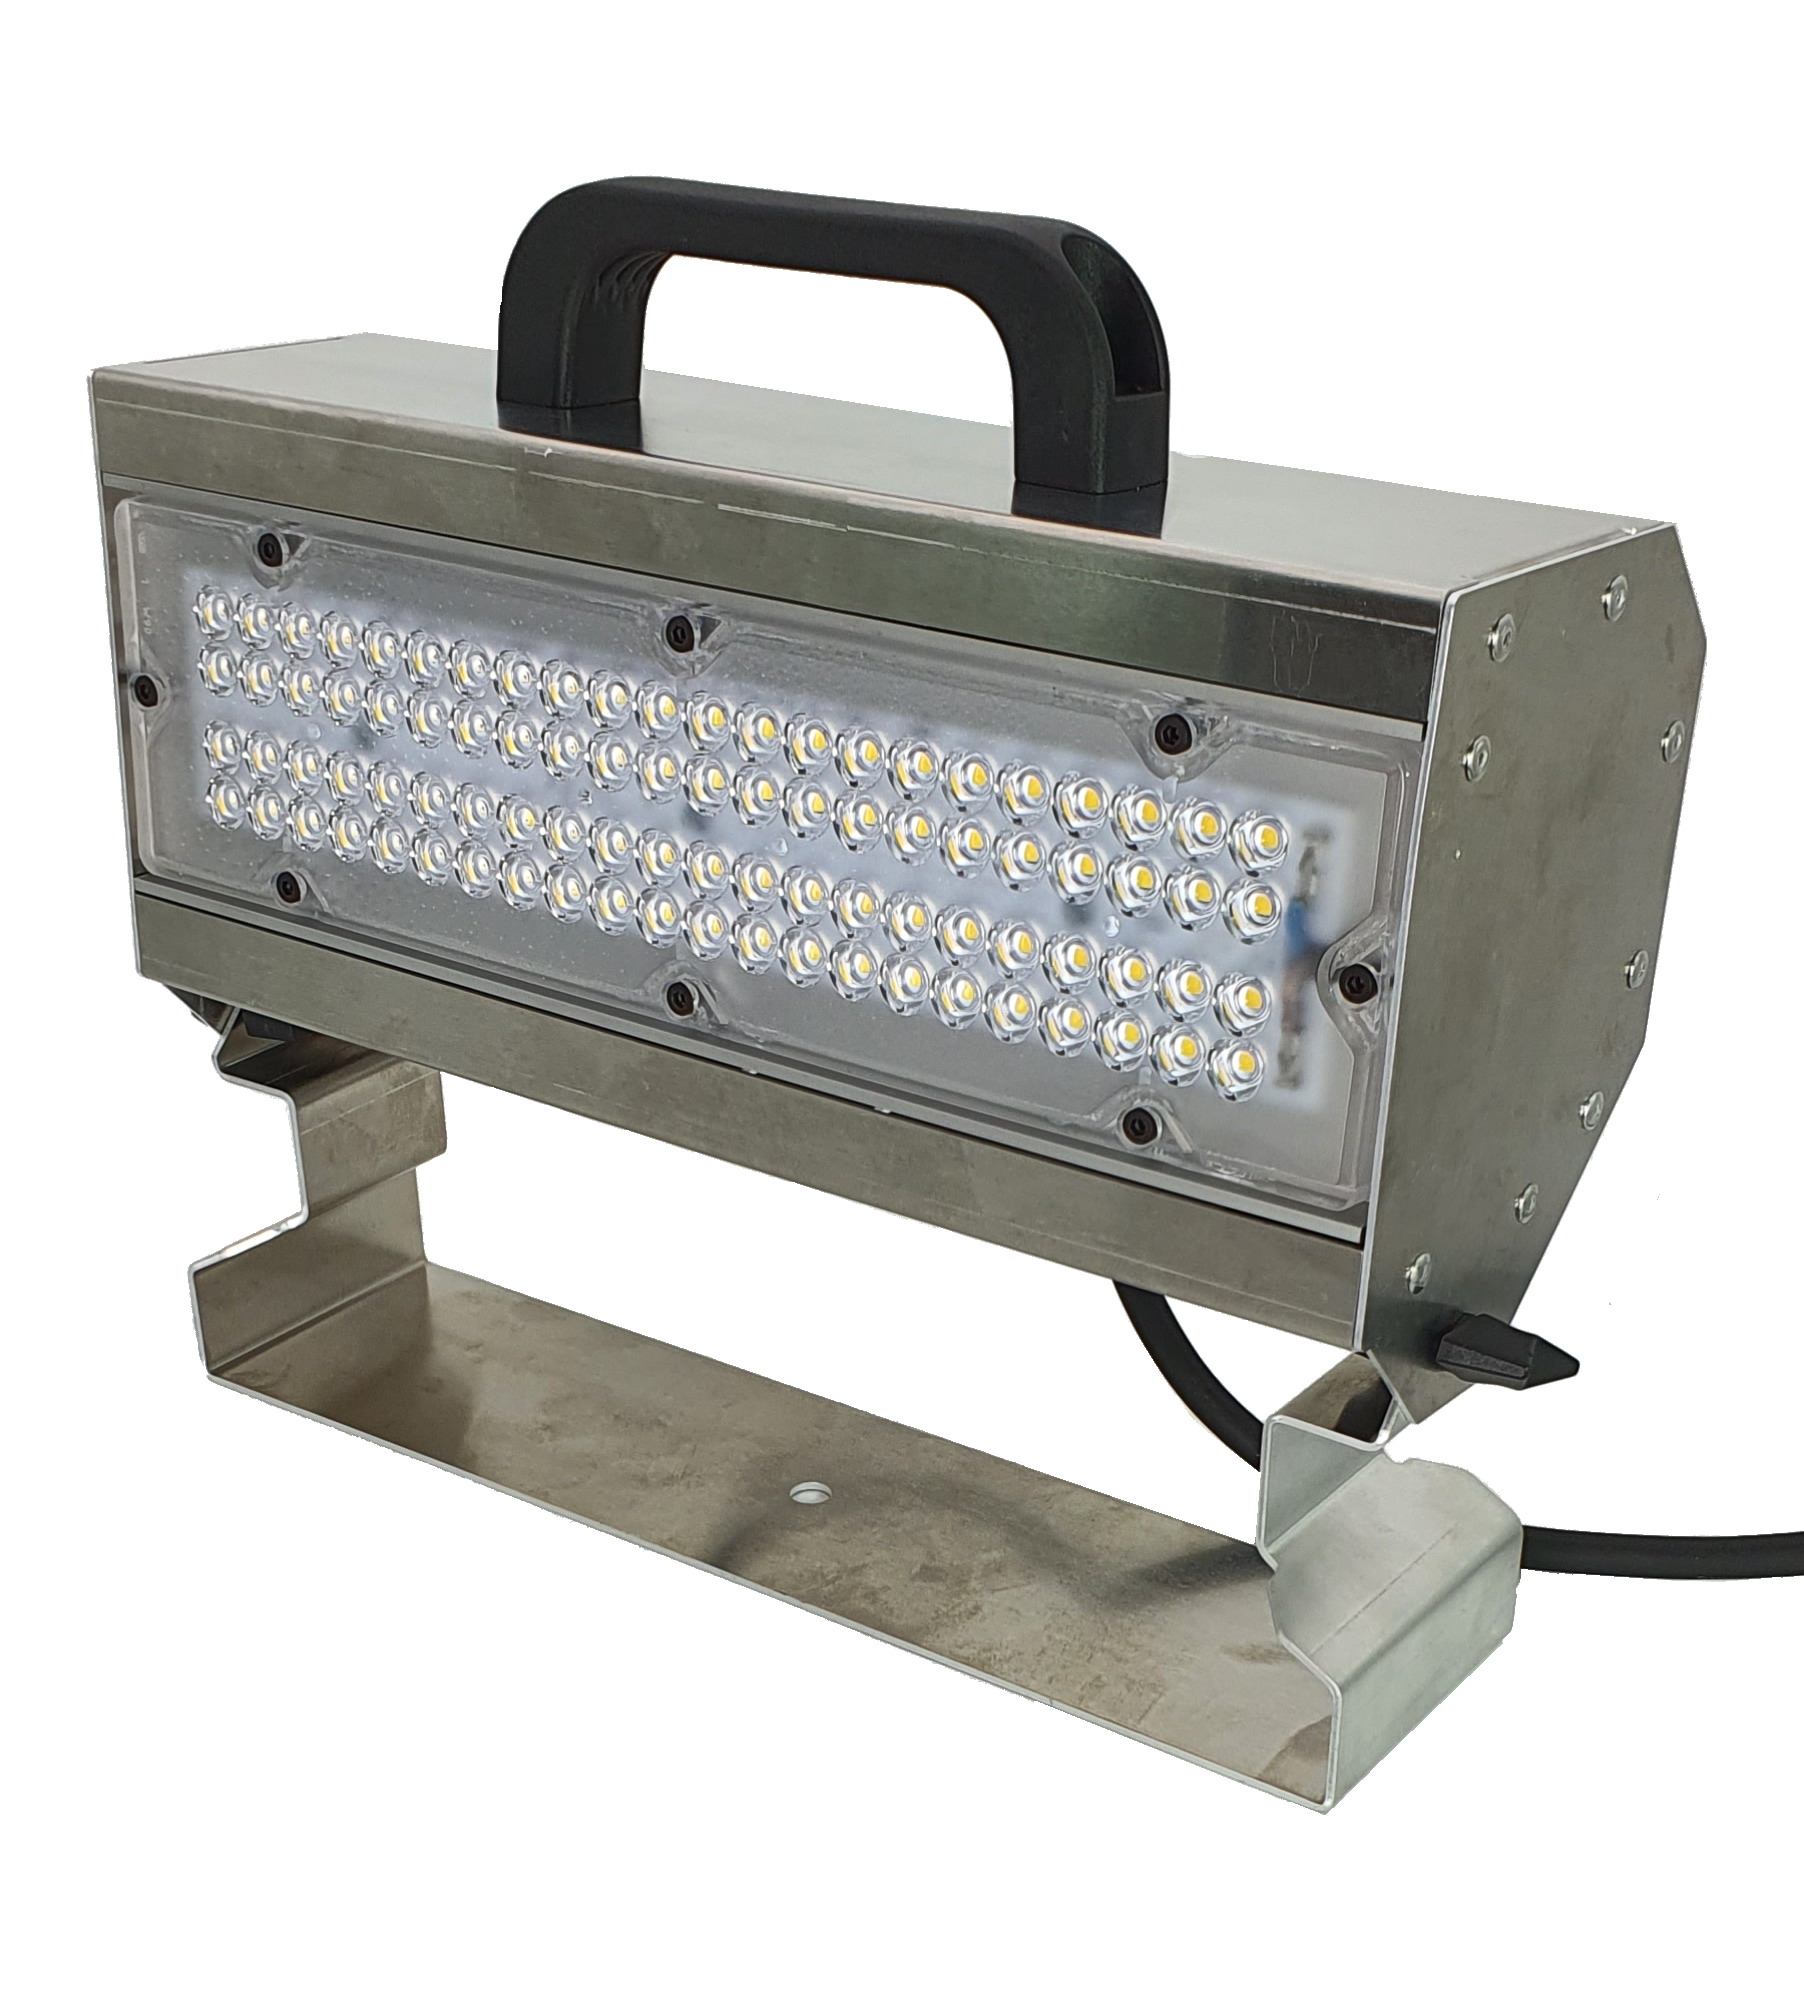 Work spotlight 50 - IP 65 LED spotlight with 7,600 lumens